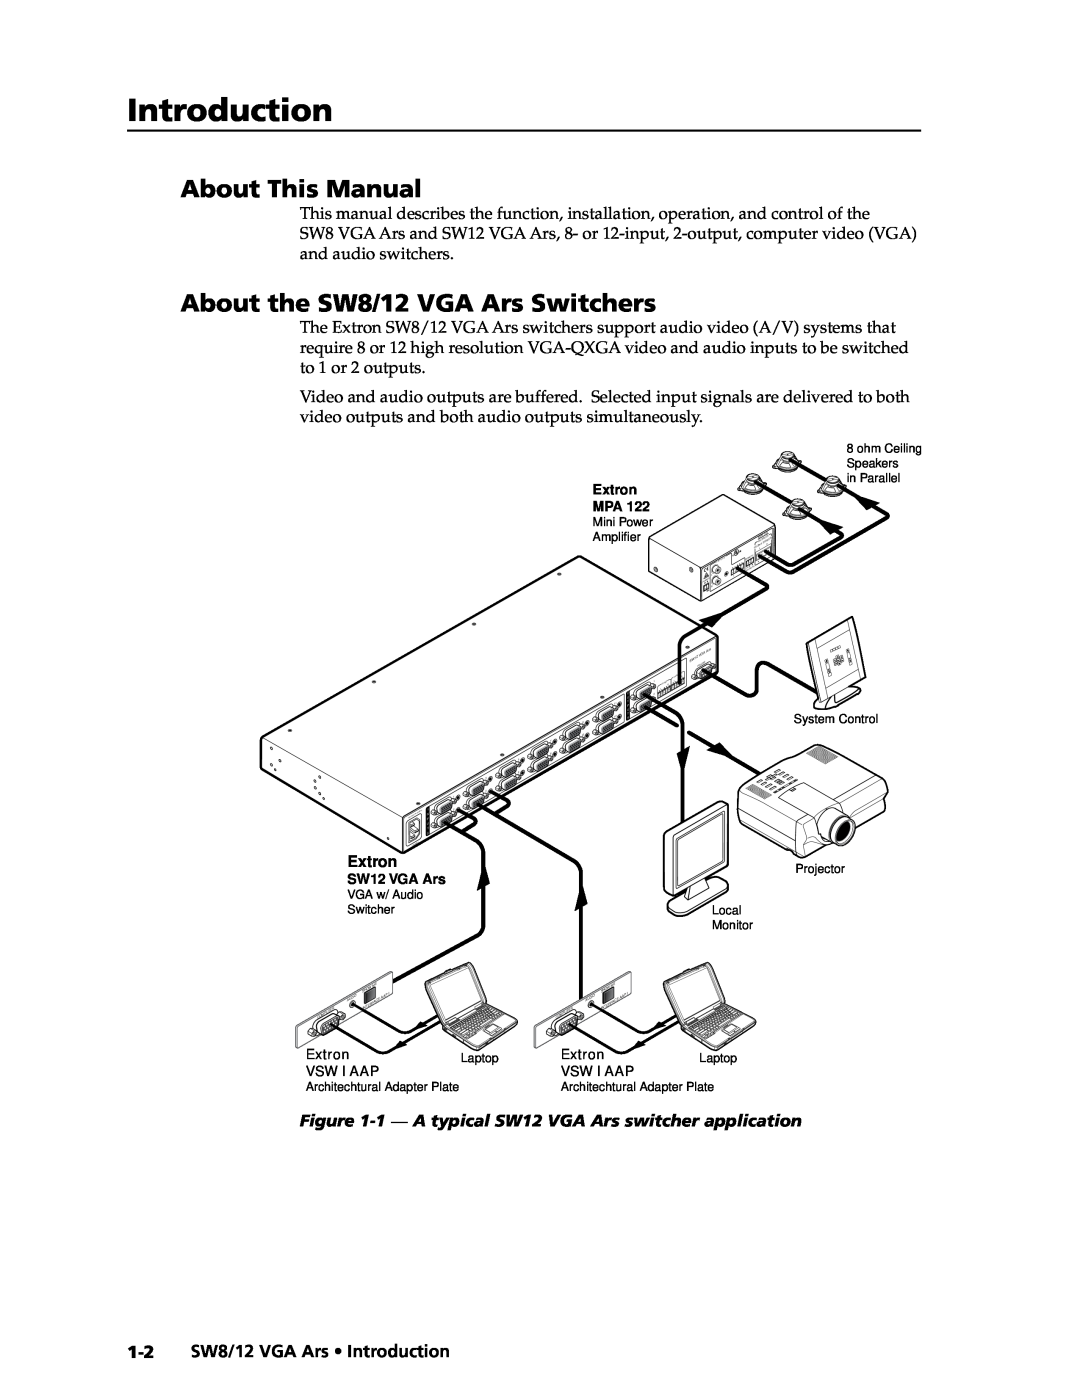 Extron electronic SW12 VGA ARS manual Introduction, About This Manual, About the SW8/12 VGA Ars Switchers 